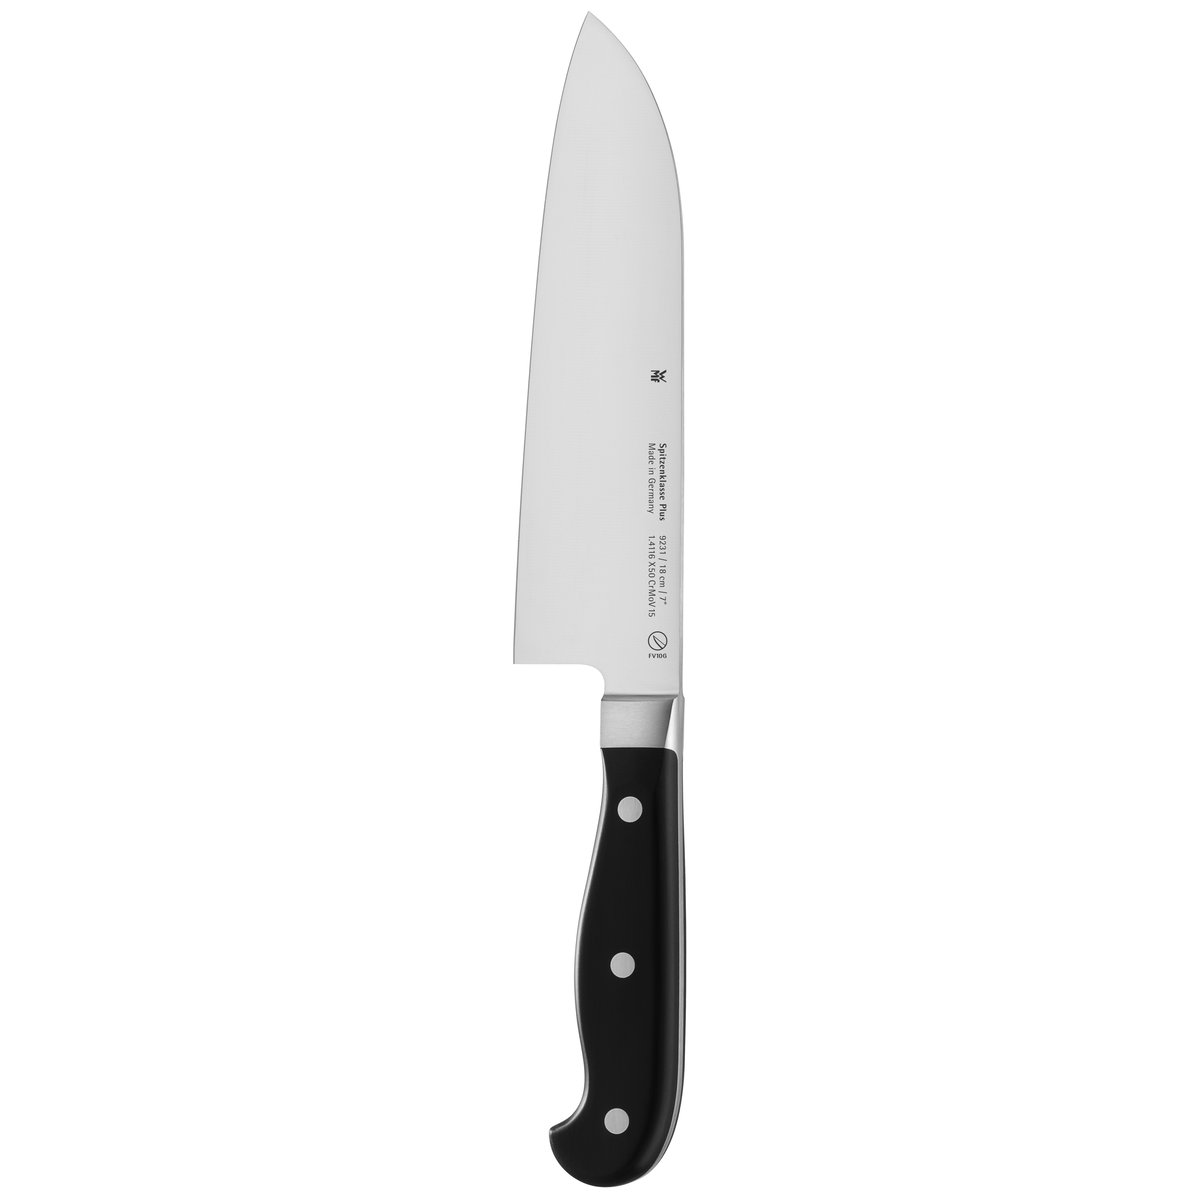 wmf couteau santoku spitzenklasse plus 18cm acier inoxydable